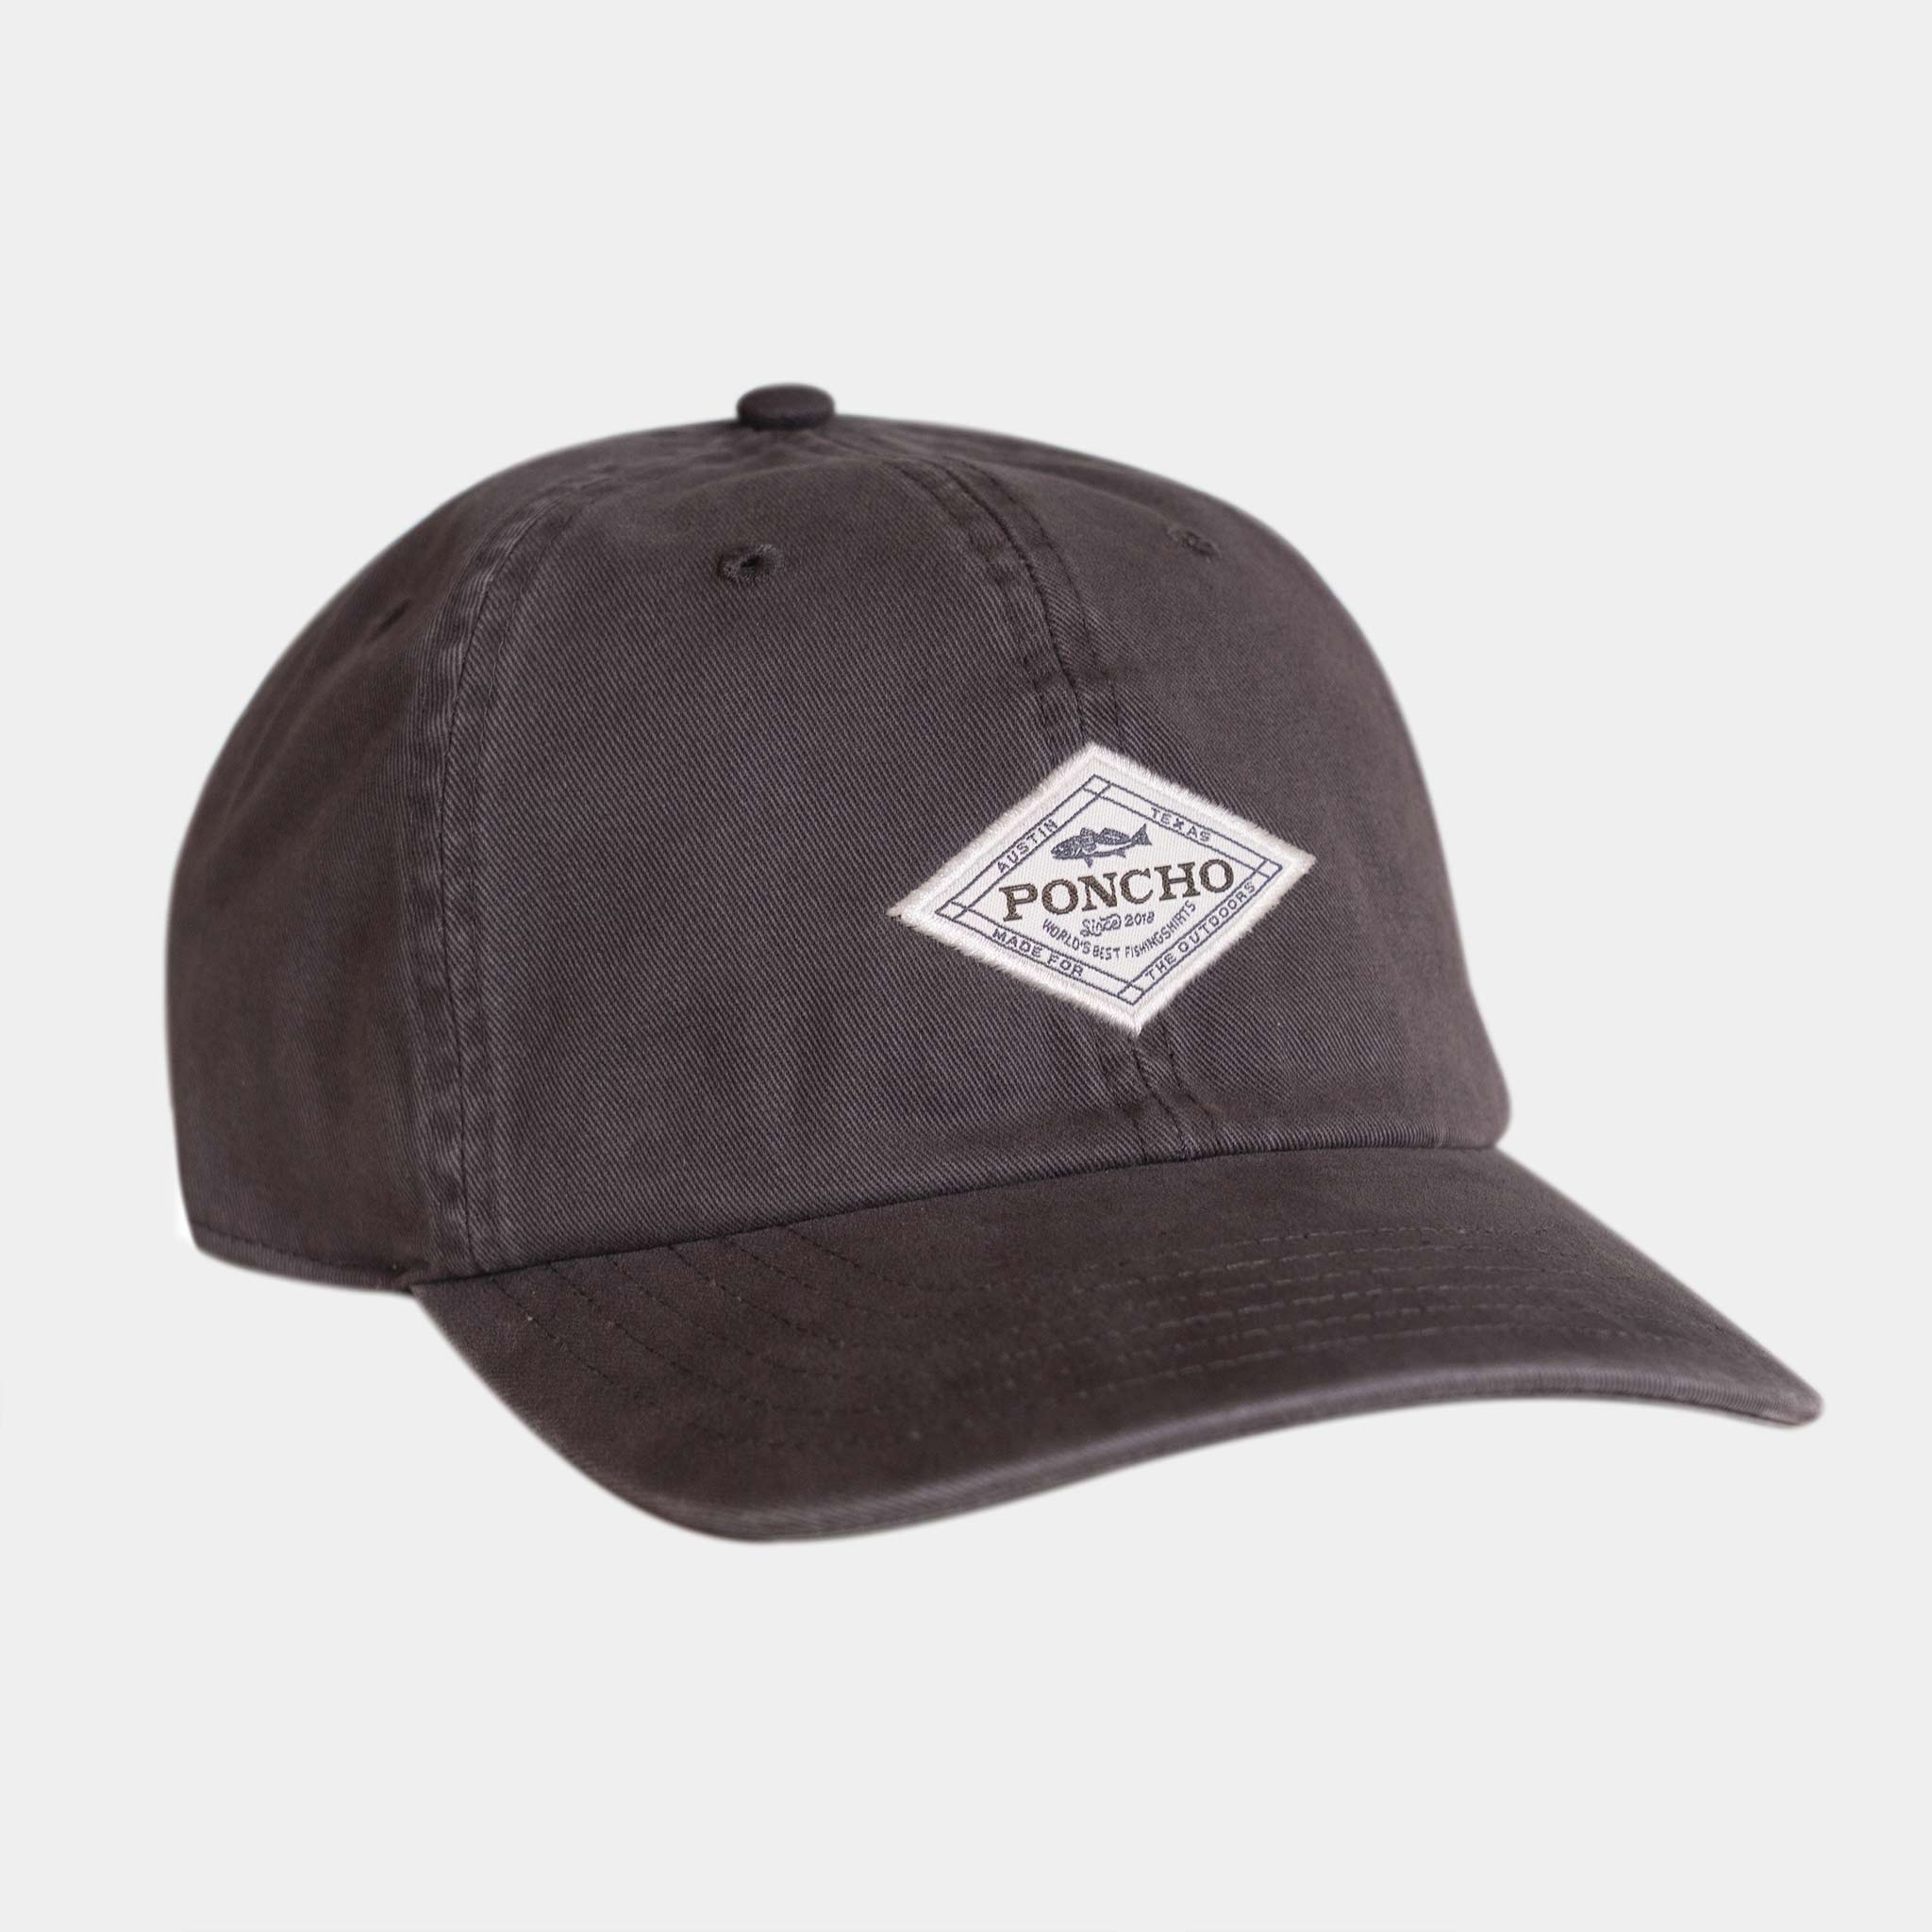 produc pic of diamon patch hat